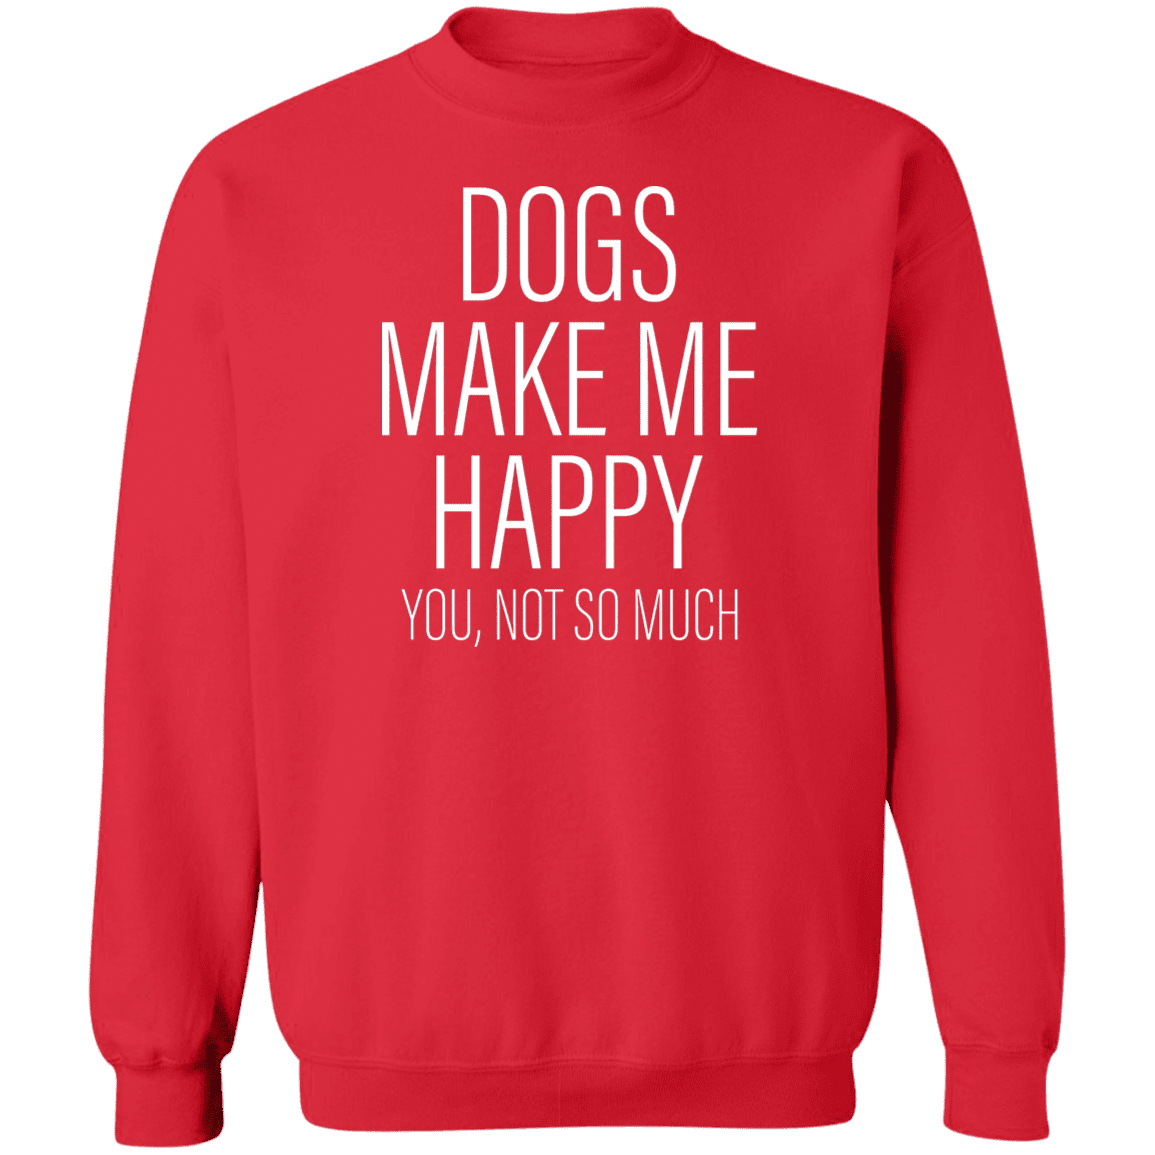 Dogs Make Me Happy - Sweatshirt.